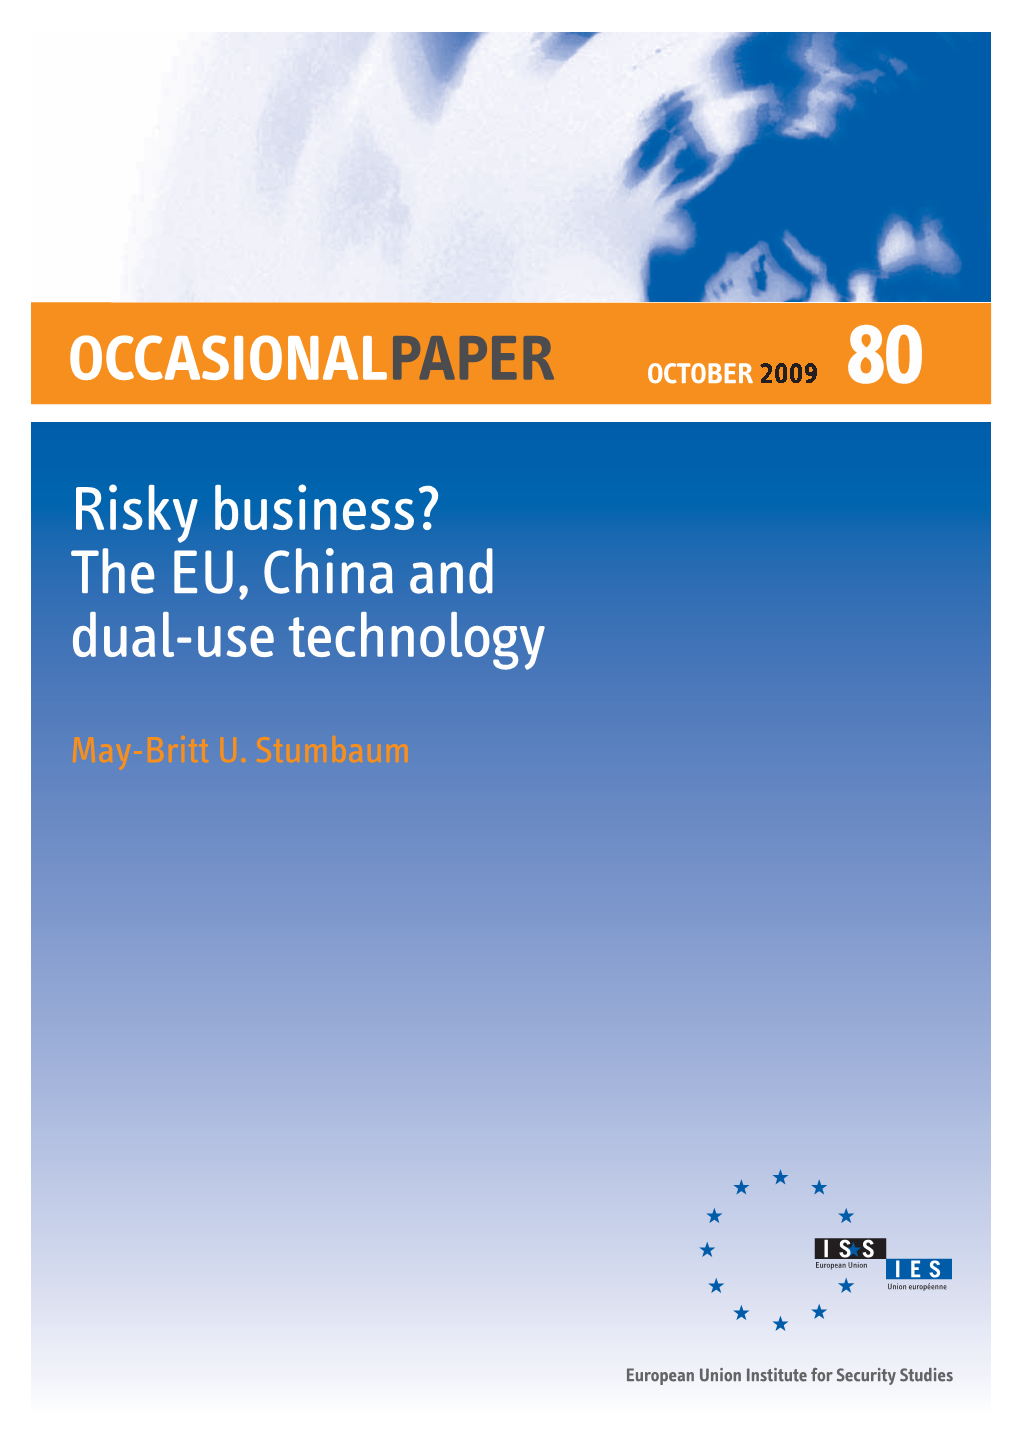 The EU, China and Dual-Use Technology